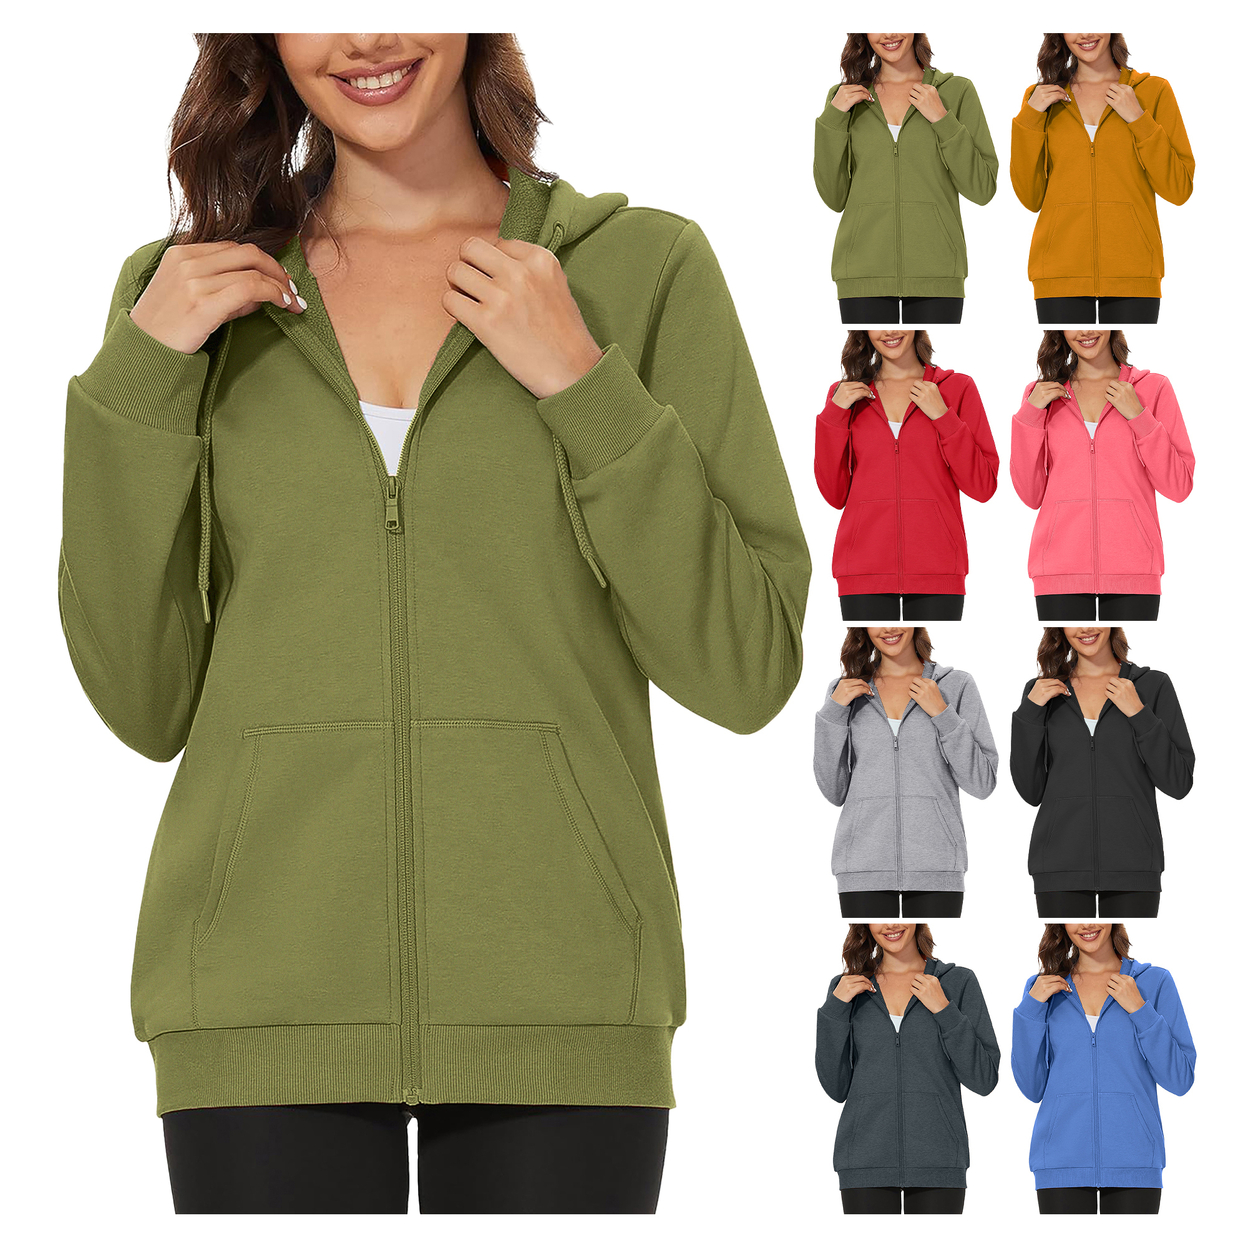 2-Pack: Women's Winter Warm Soft Blend Fleece Lined Full Zip Up Hoodie - Black & Grey, Large